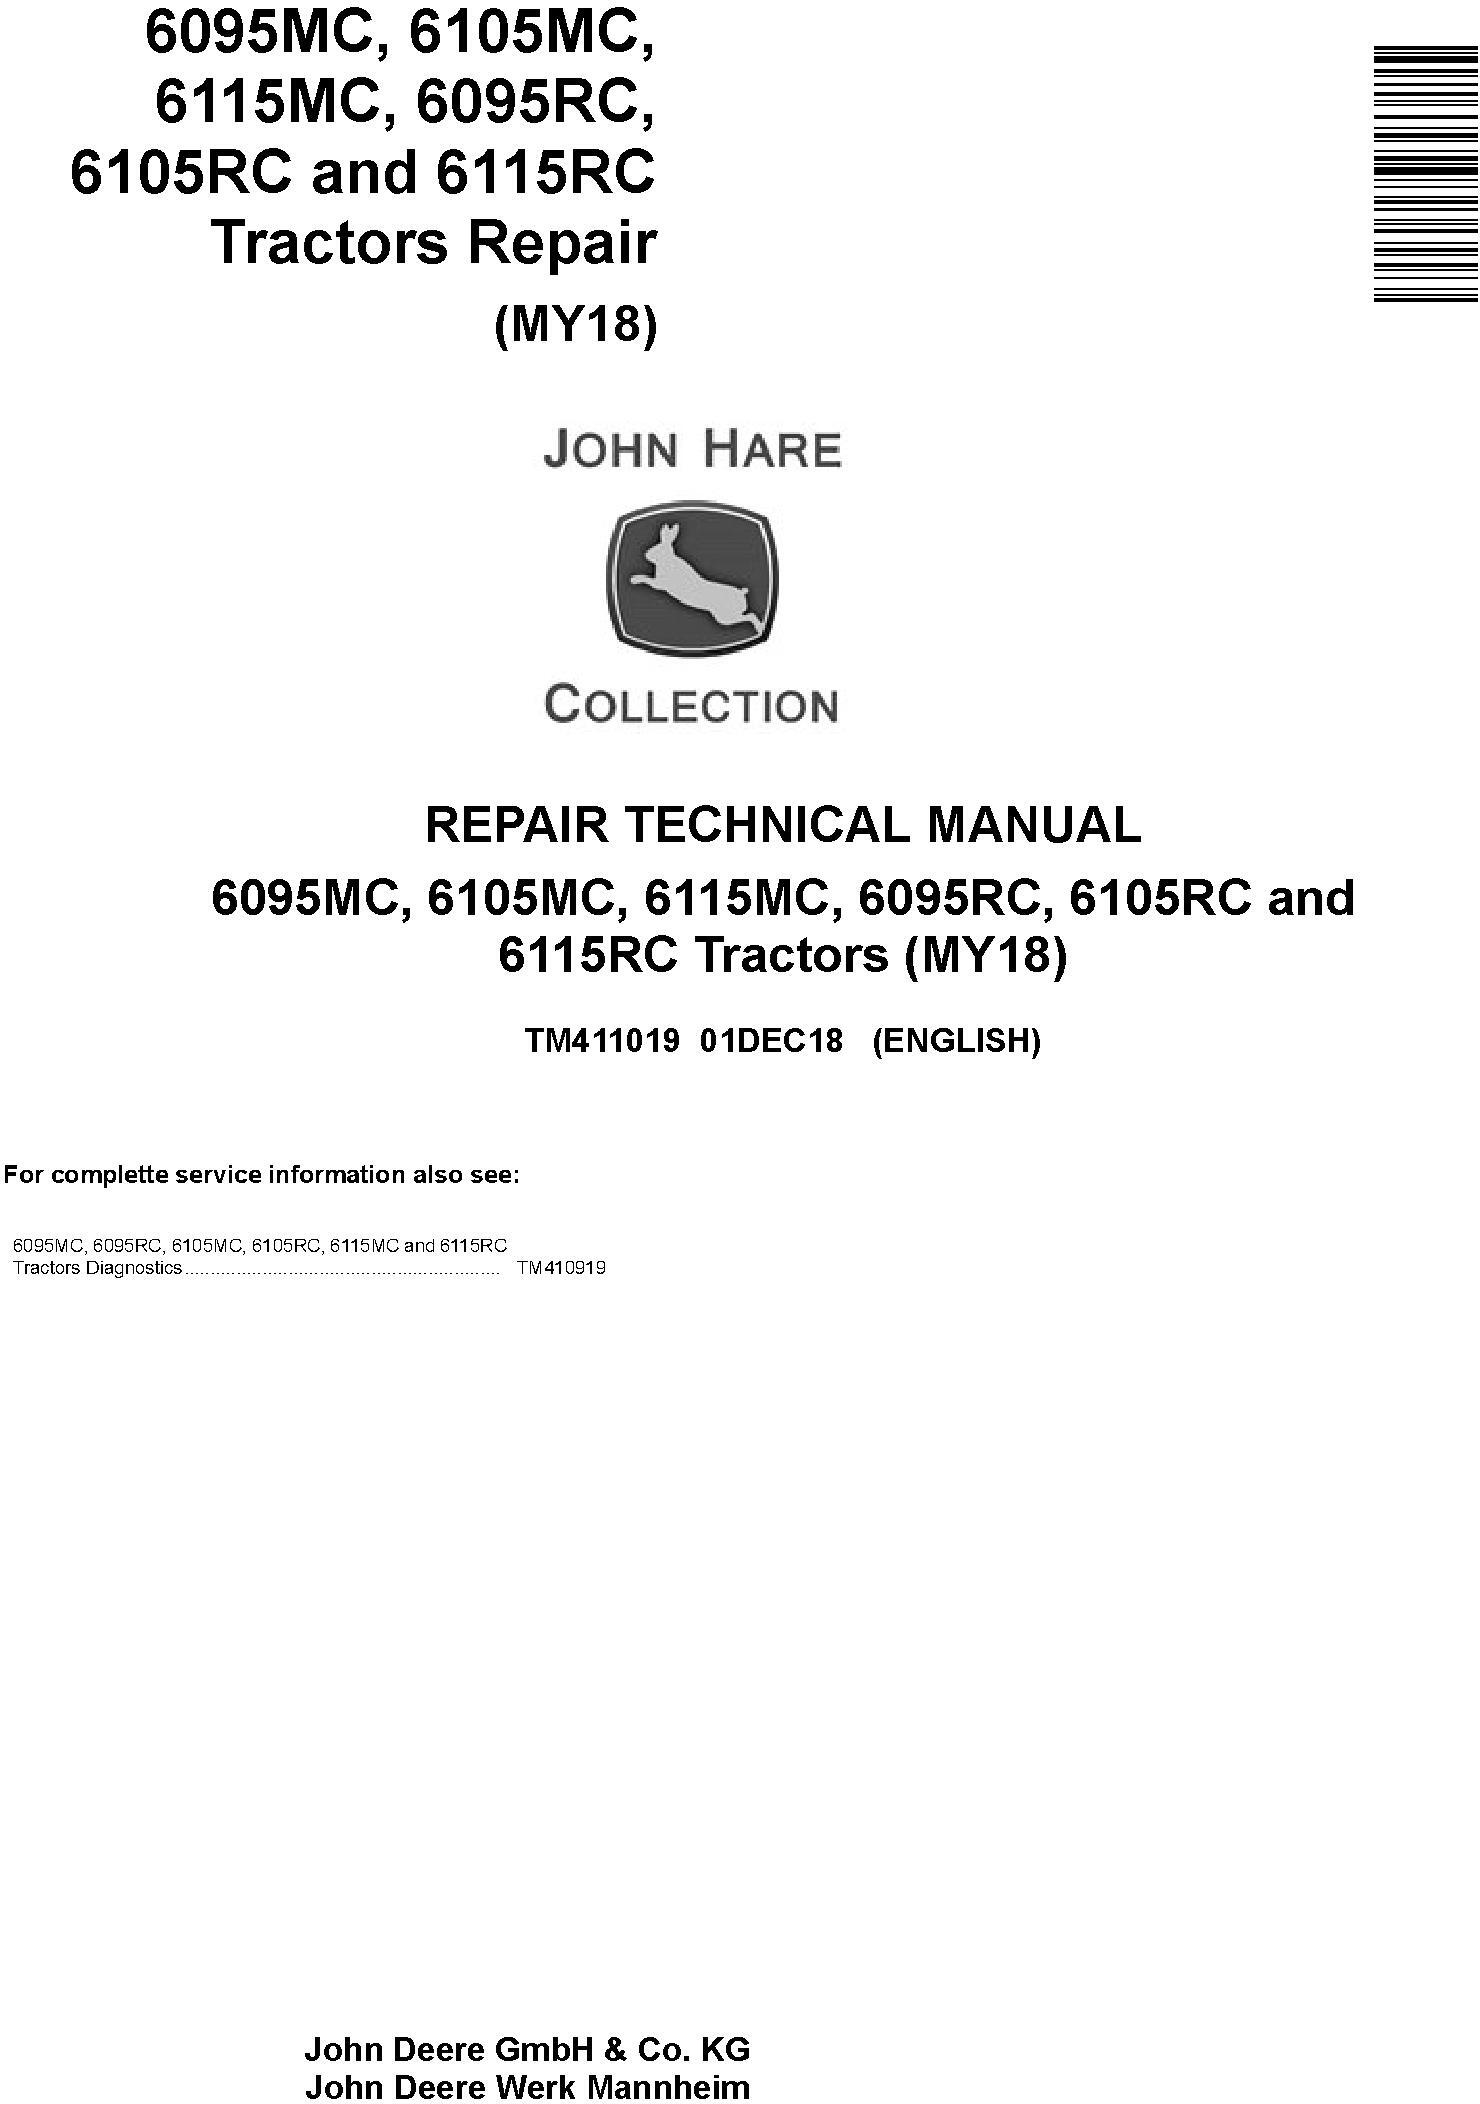 John Deere 6095MC, 6095RC, 6105MC, 6105RC, 6115MC, 6115RC Tractor Repair Technical Manual (TM411019) - 19139